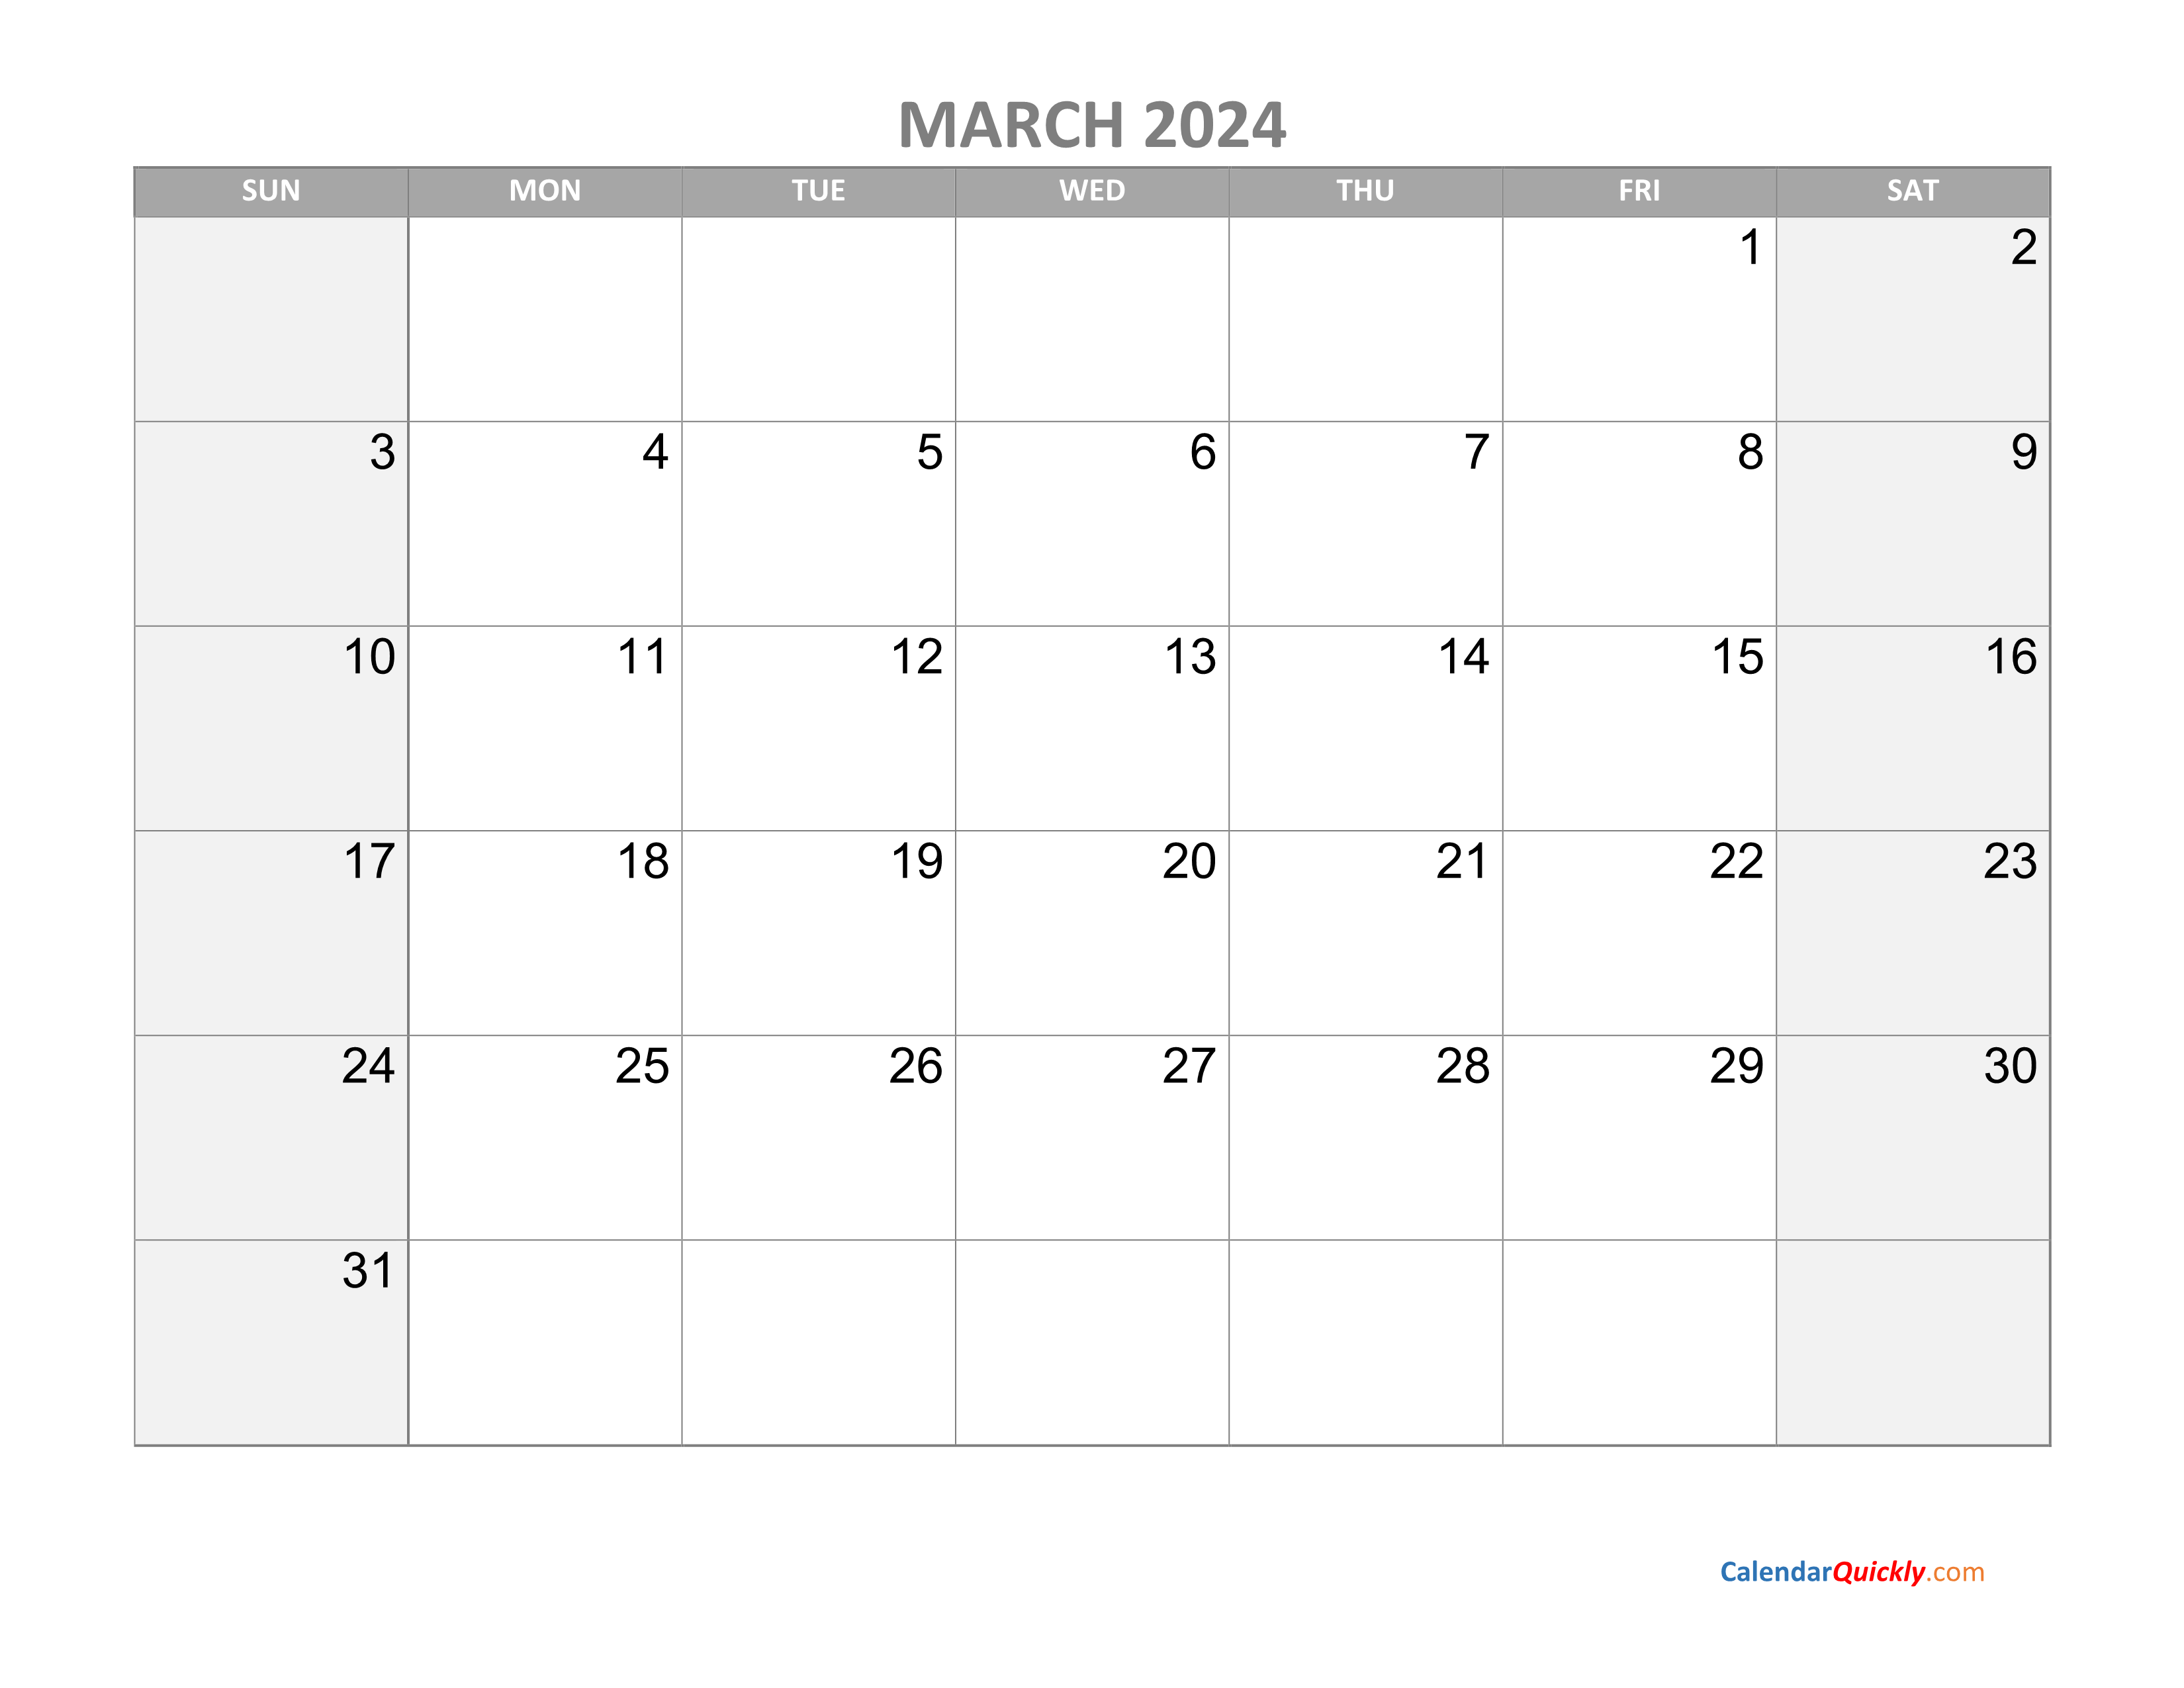 Магический календарь 2024. Календарь март 2024. Январь февраль март 2024. Календарьмарнт 2024. Mart kalendari 2024.